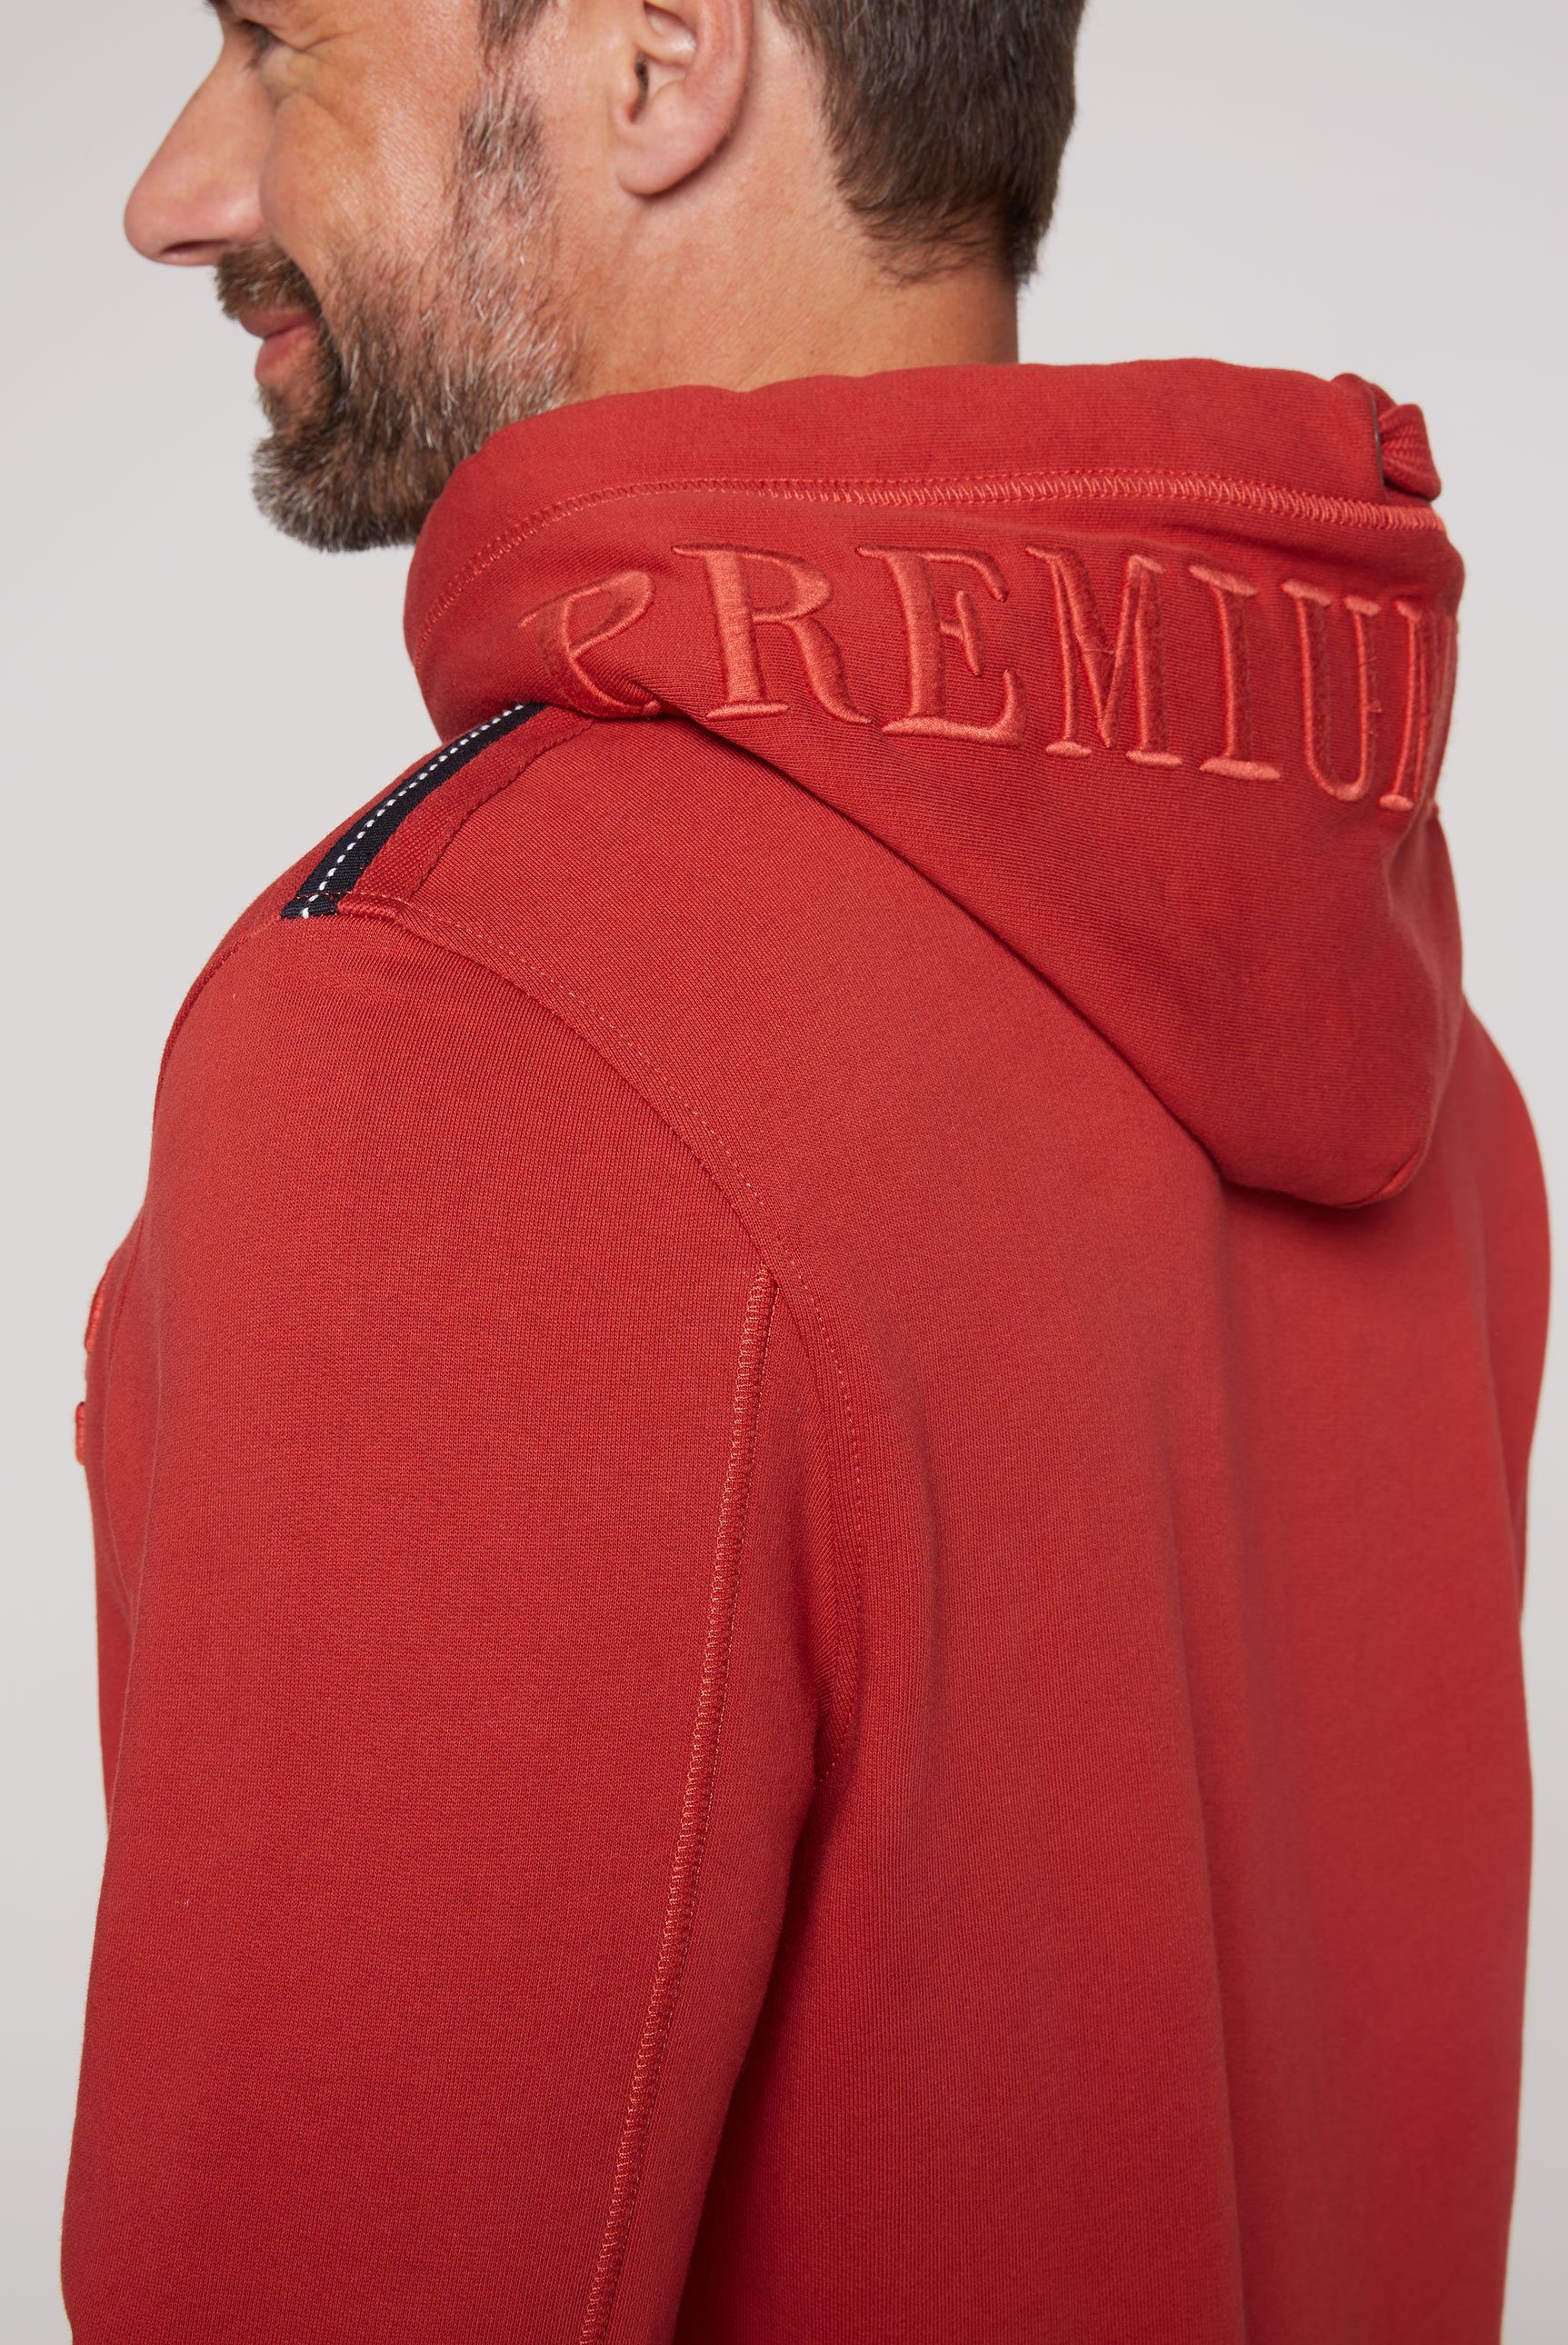 Logostickereien red DAVID CAMP mit Kapuzensweatshirt vintage